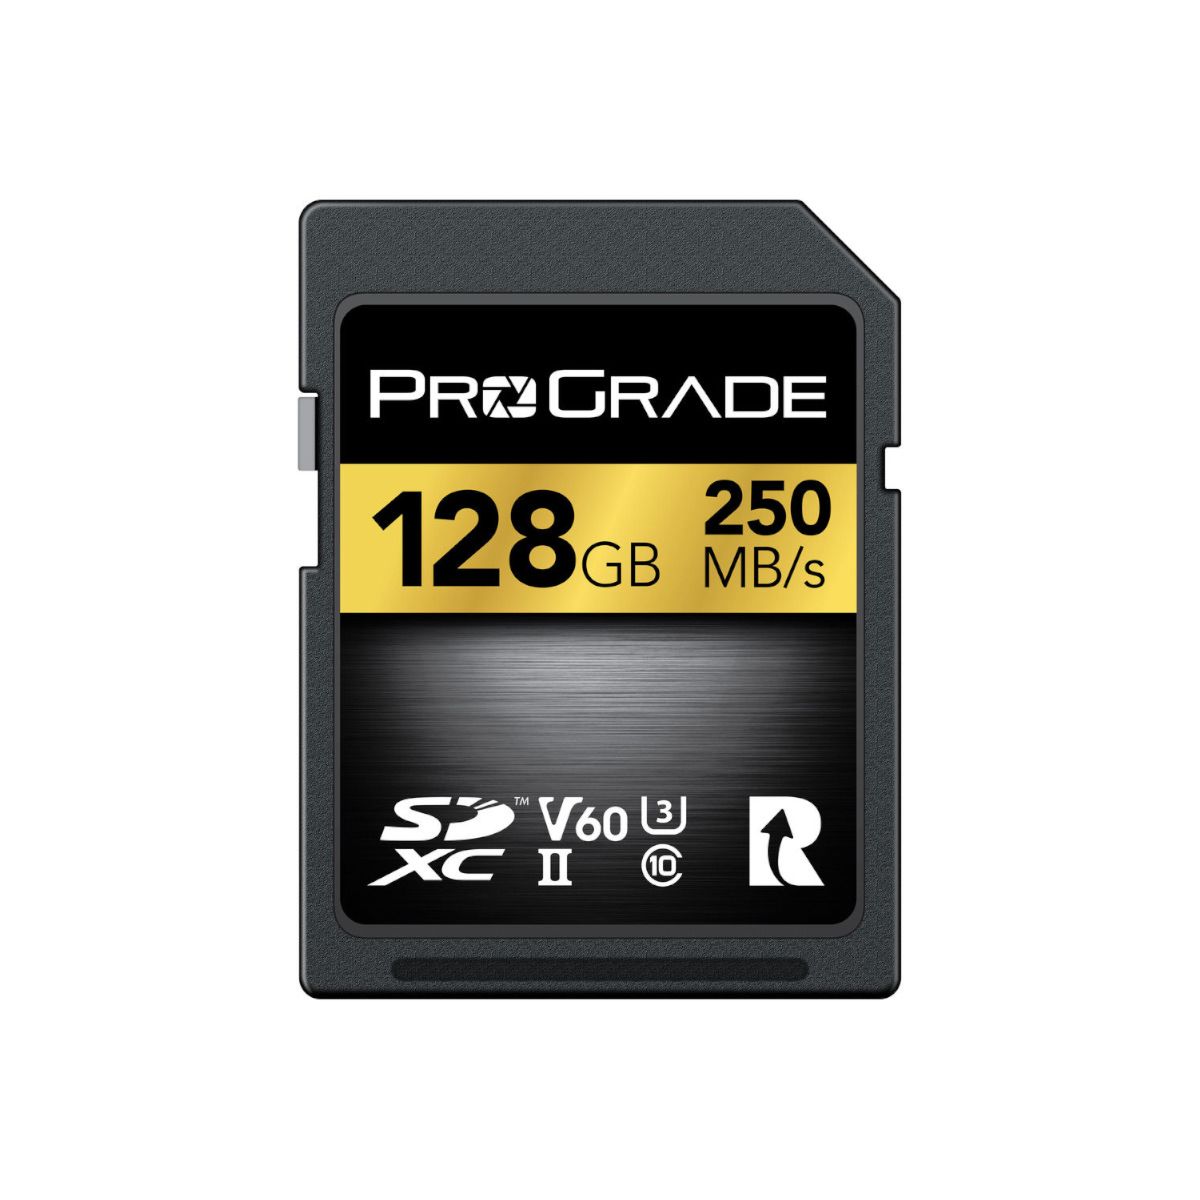 प्रोग्रेड डिजिटल 128जीबी एसडीएक्ससी यूएचएस II वी60 मेमोरी कार्ड गोल्ड 250 एमबी/एस